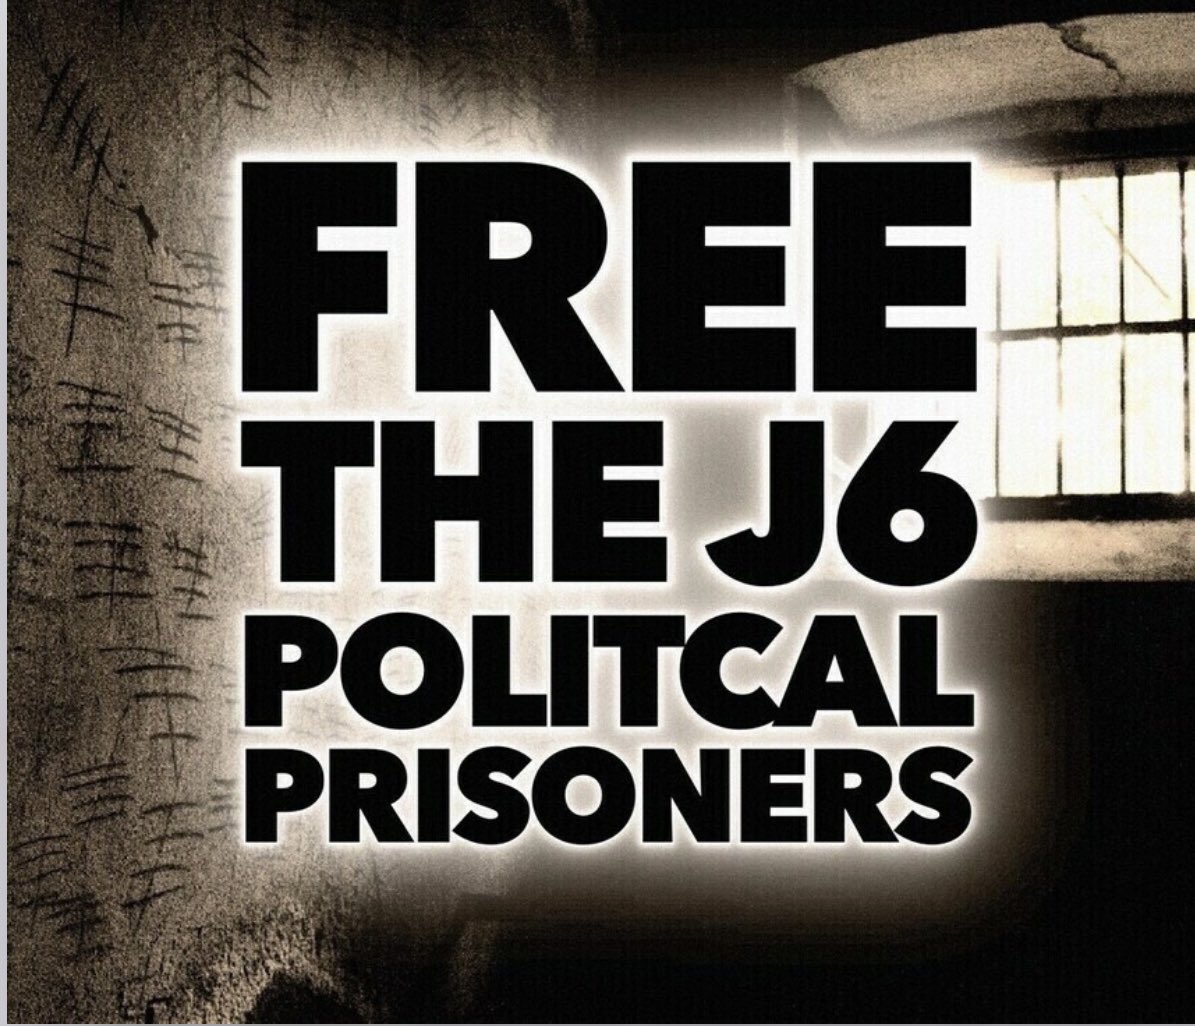 @shane79147314 @JimWill_KAG #DemocratsLies
#J6CommitteeLied
#LockThemUp
#FreeJ6PoliticalPrisoners